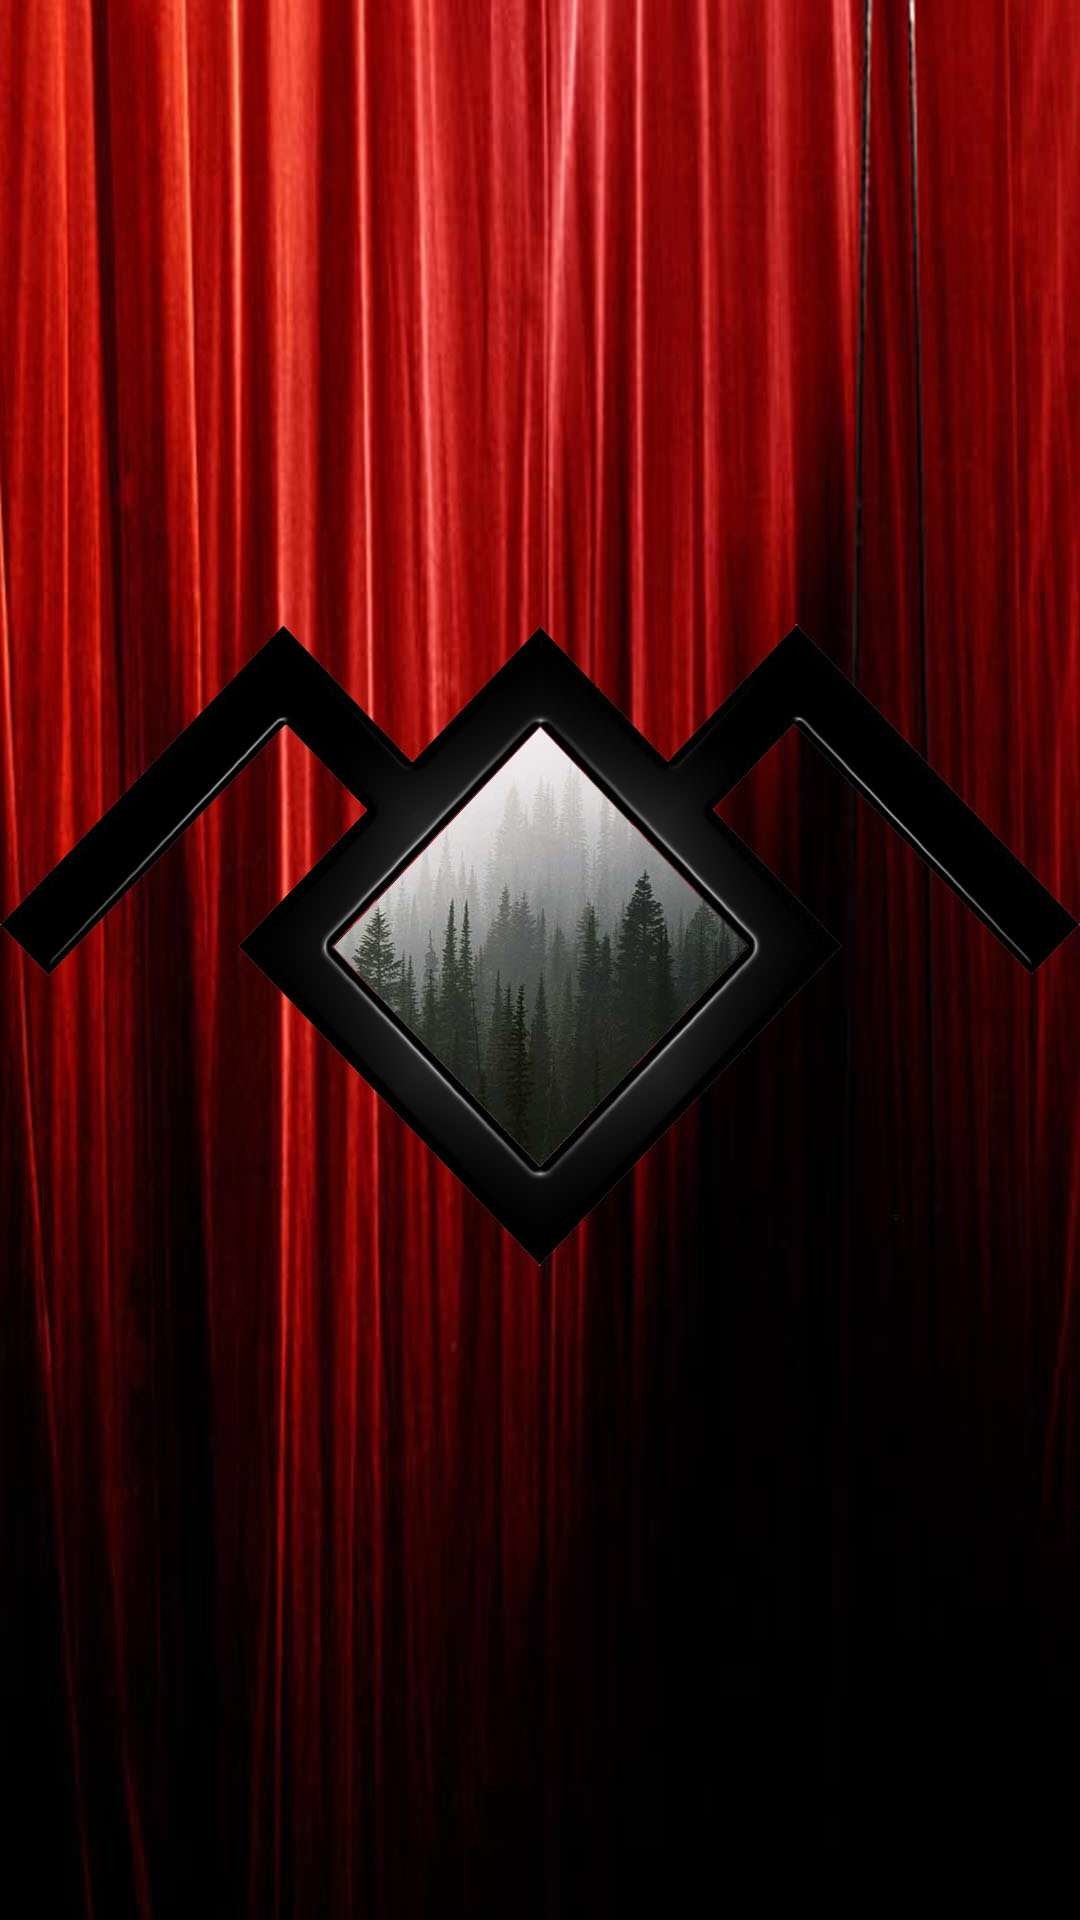 twin peaks wallpaper,rot,licht,beleuchtung,zimmer,vorhang